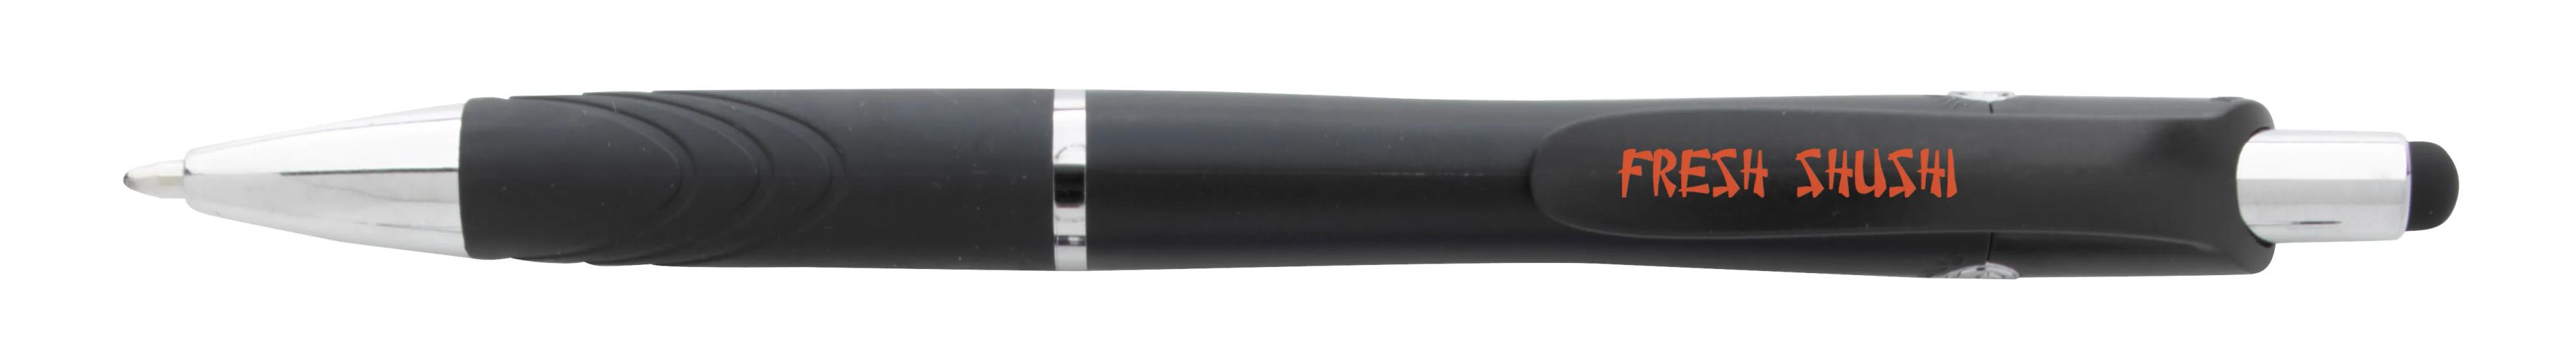 Souvenir® Emblem Stylus Pen 28 of 37